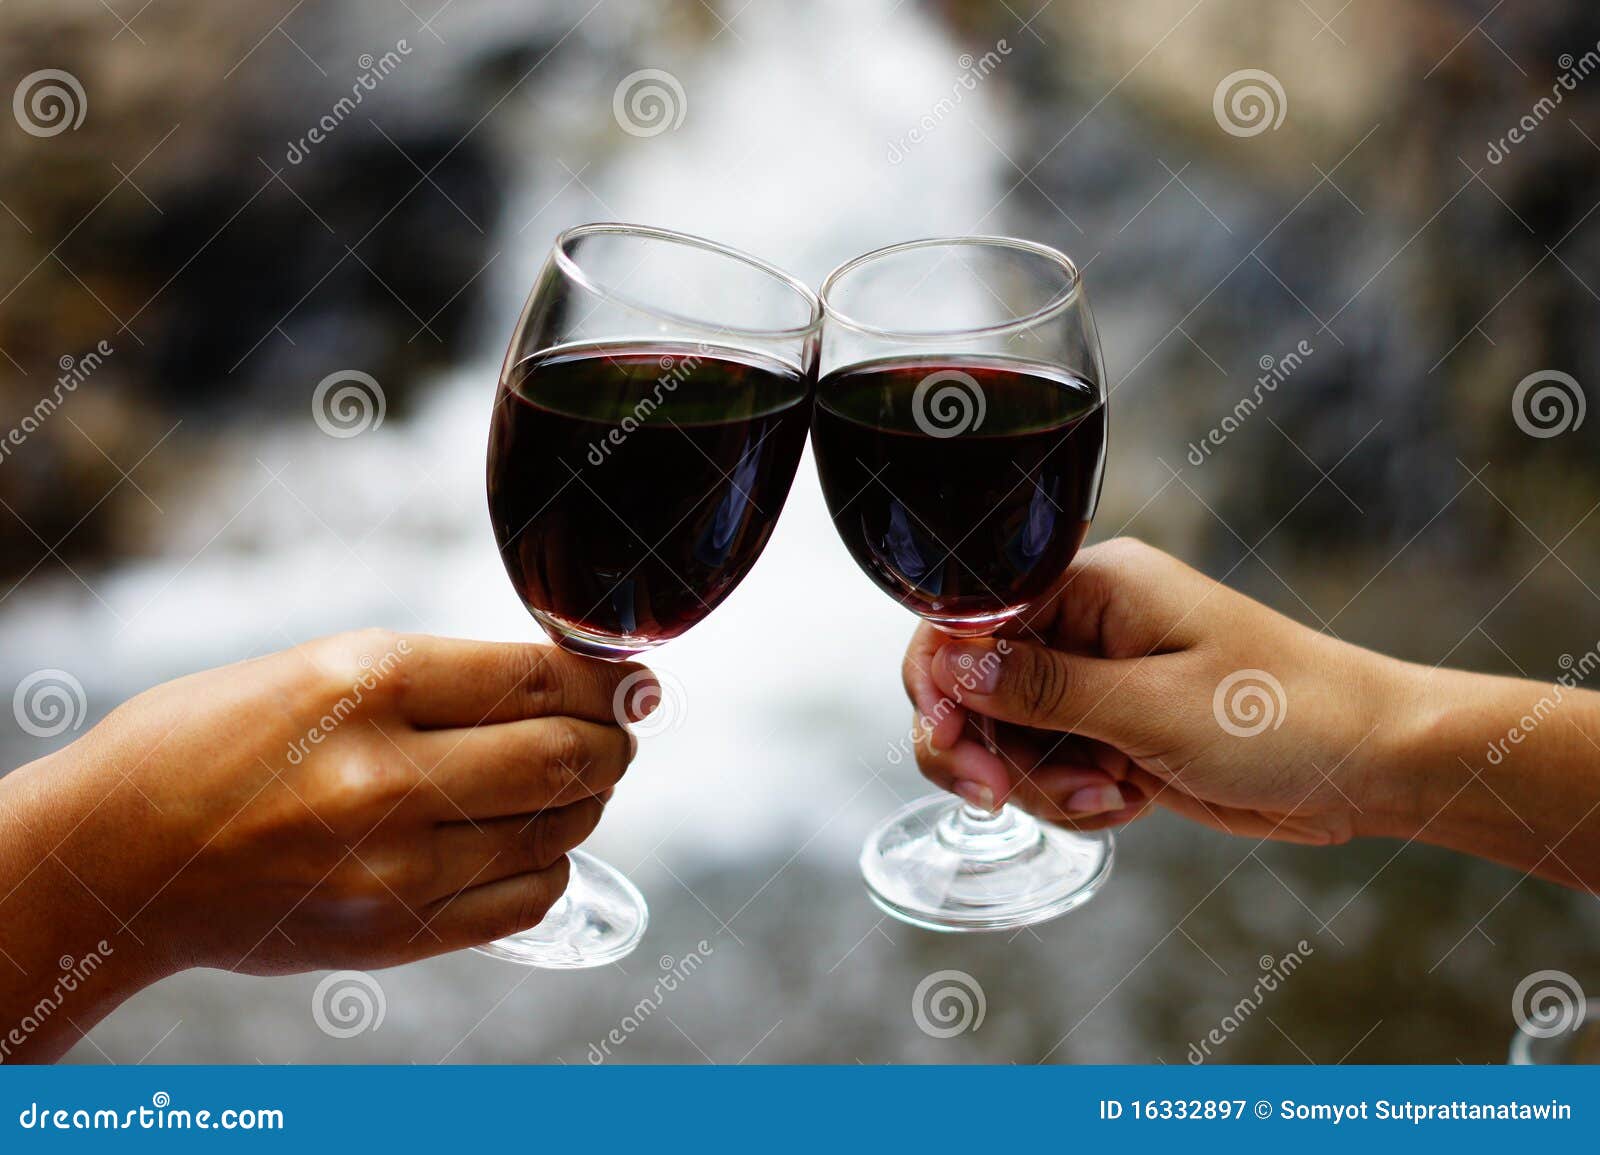 wine cheers